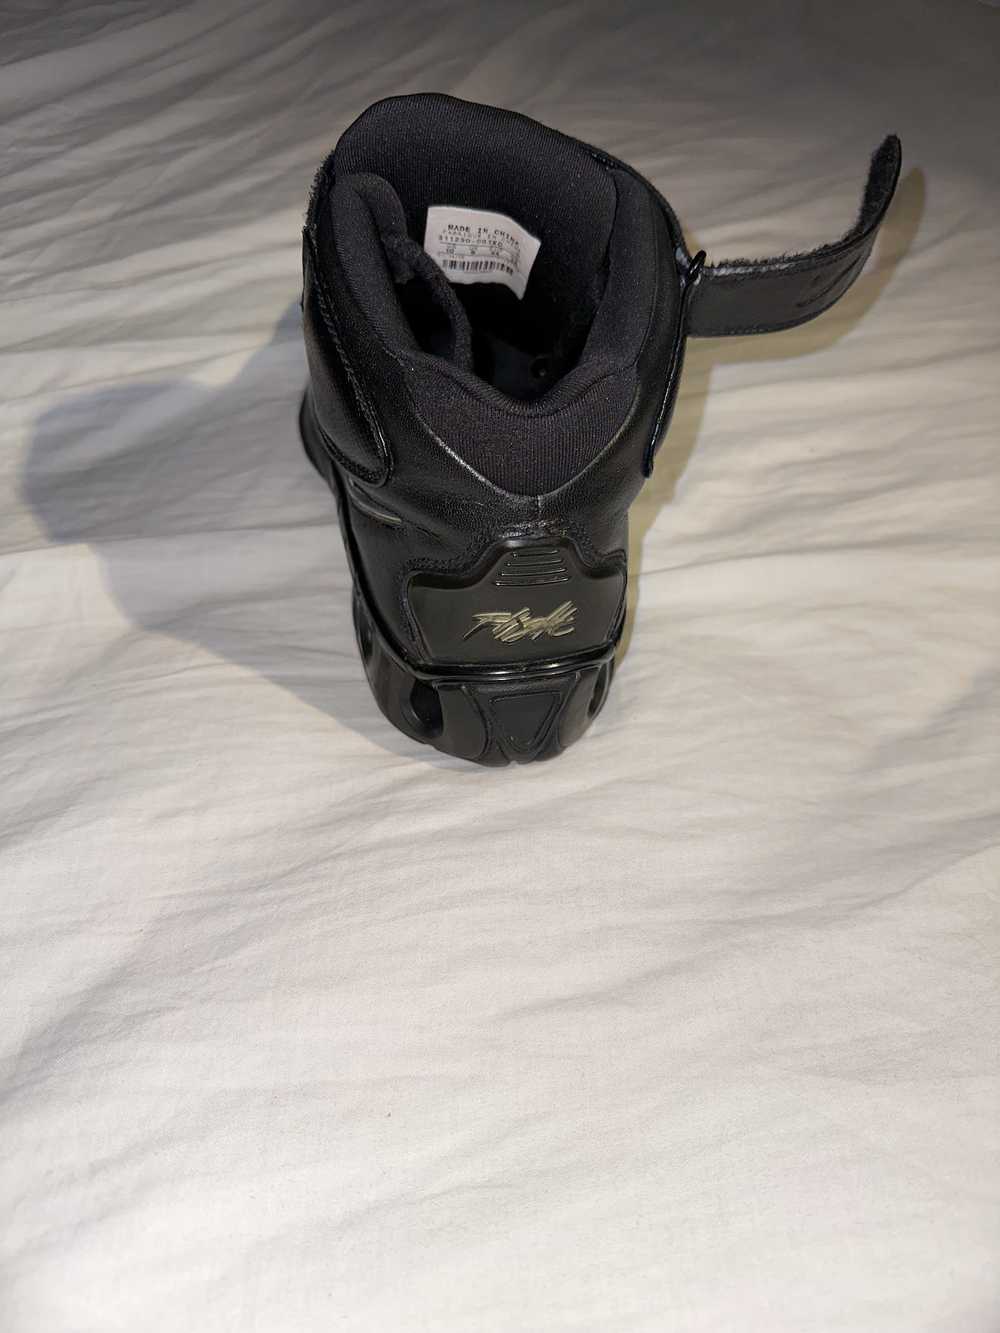 Nike 2005 Nike flight, all black basketball shoe - image 4